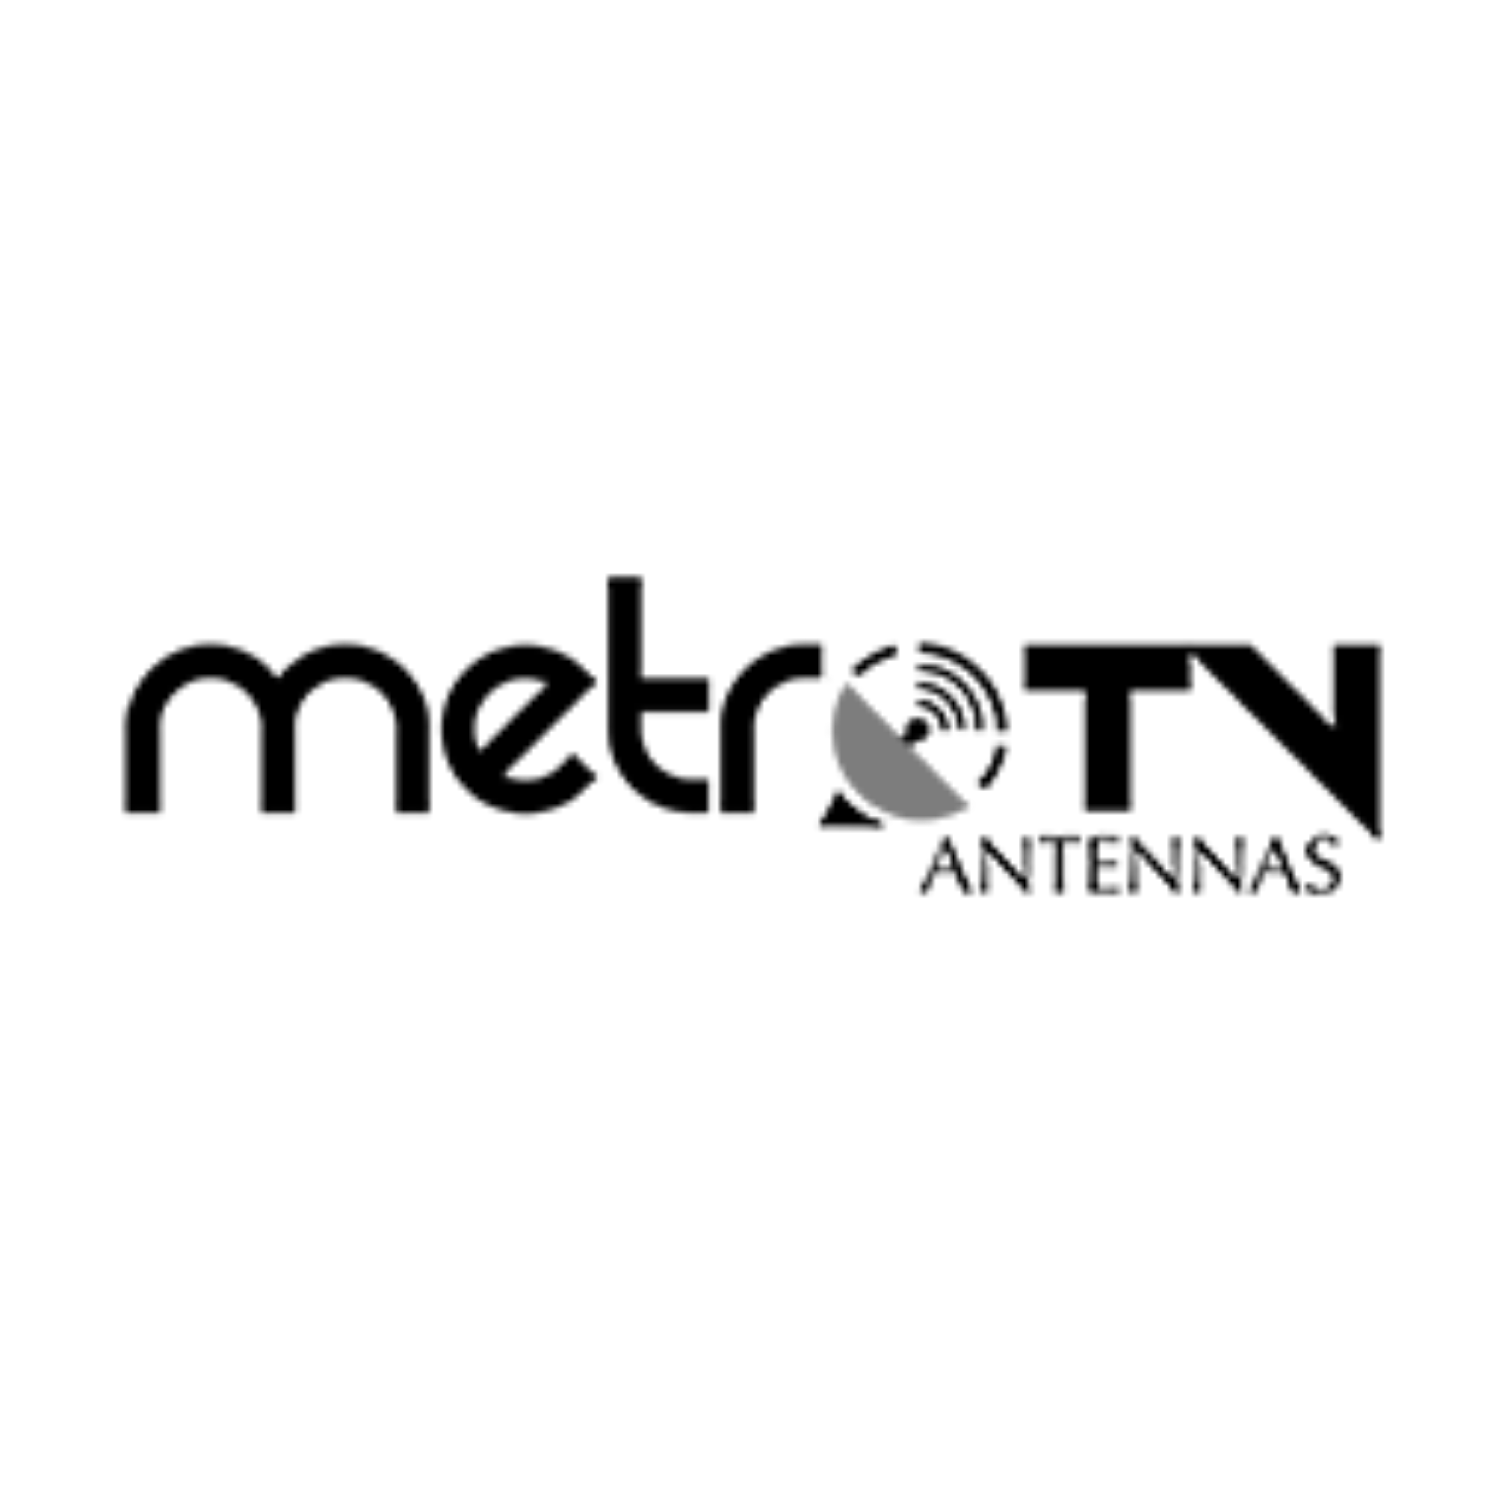 Metro Tv Antenna